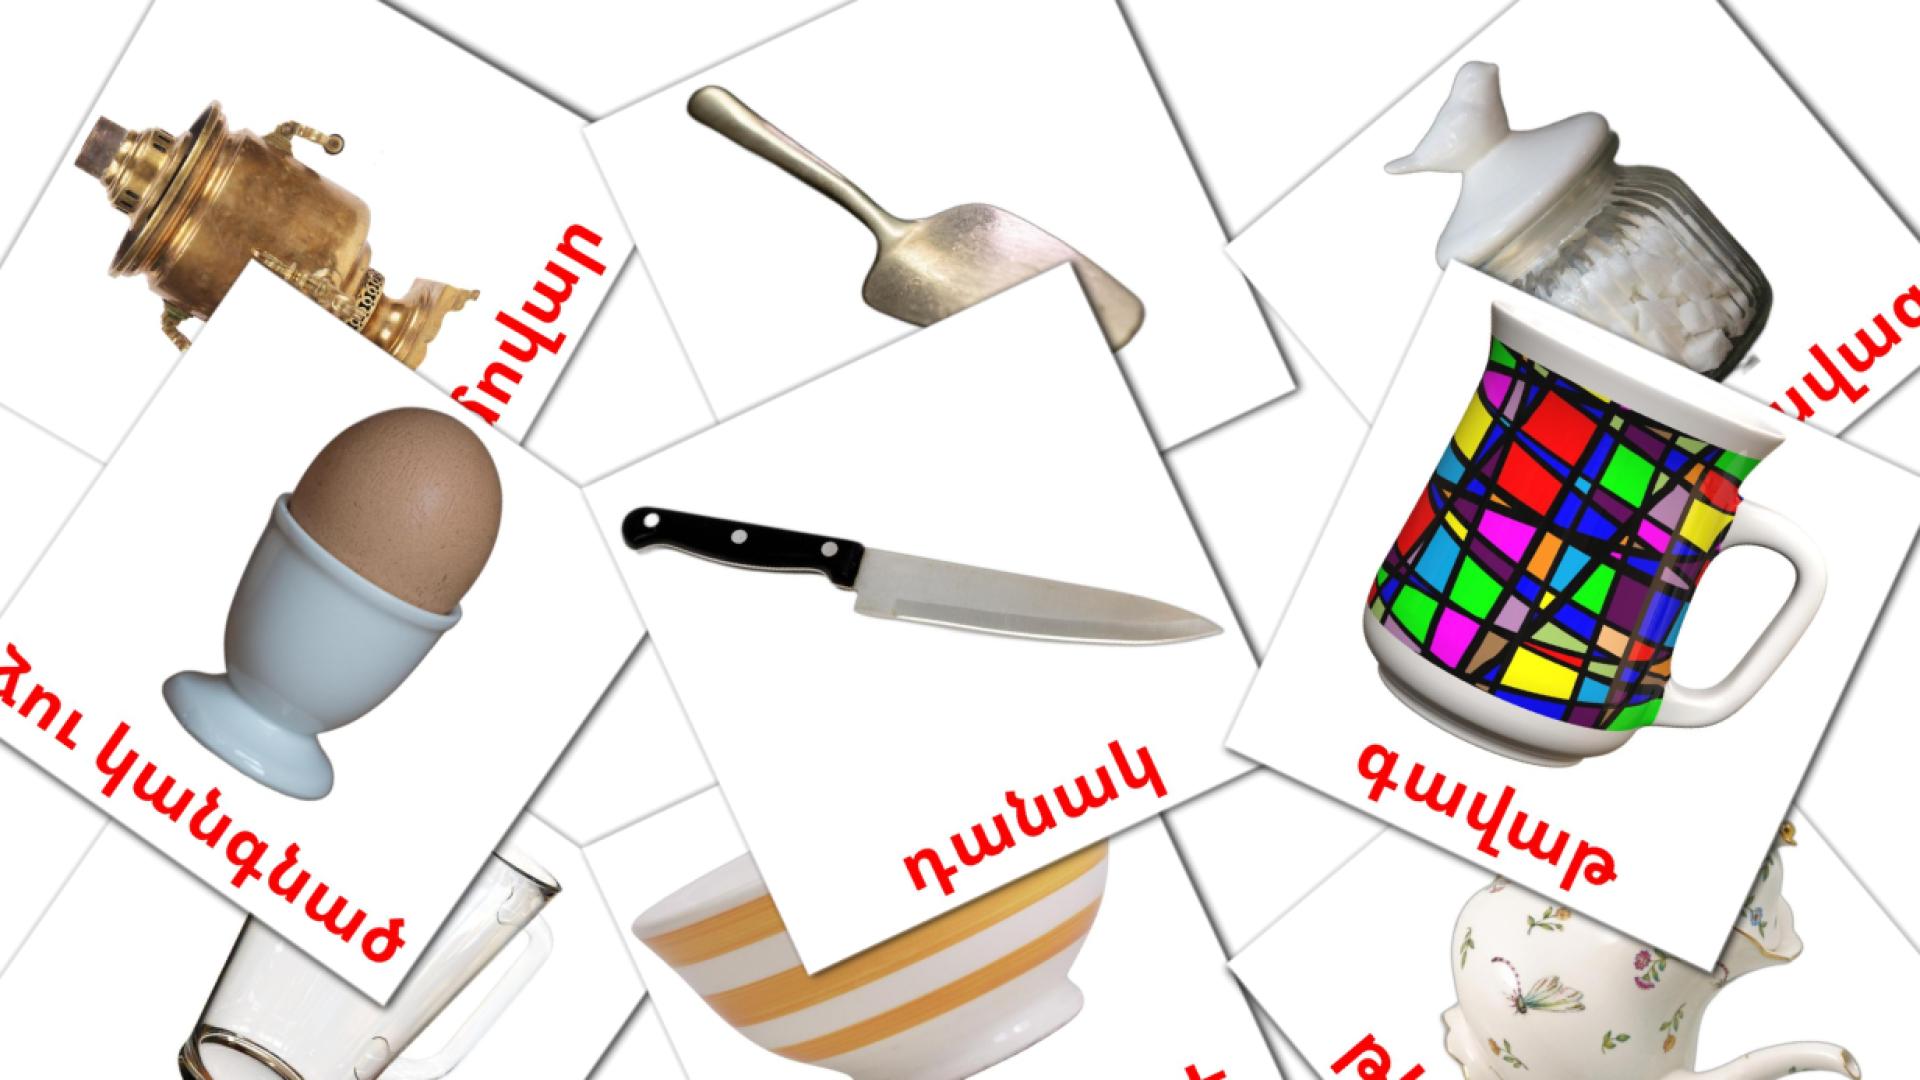 Crockery and cutlery - armenian vocabulary cards